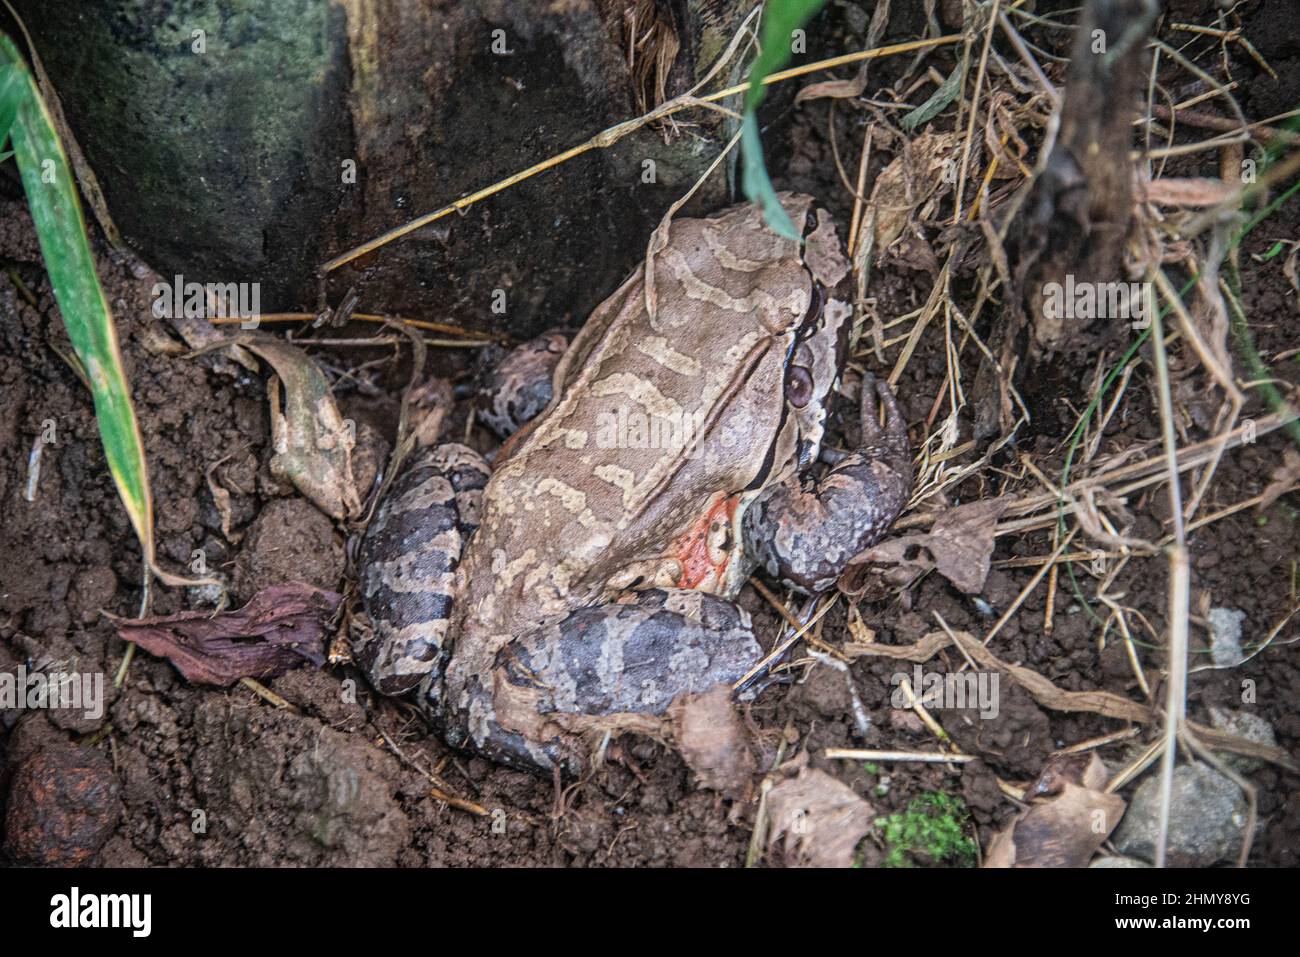 Rana de la selva ahumada (Leptodactylus pentadactylus), Reserva del Bosque Nuboso de Monteverde, Costa Rica Foto de stock